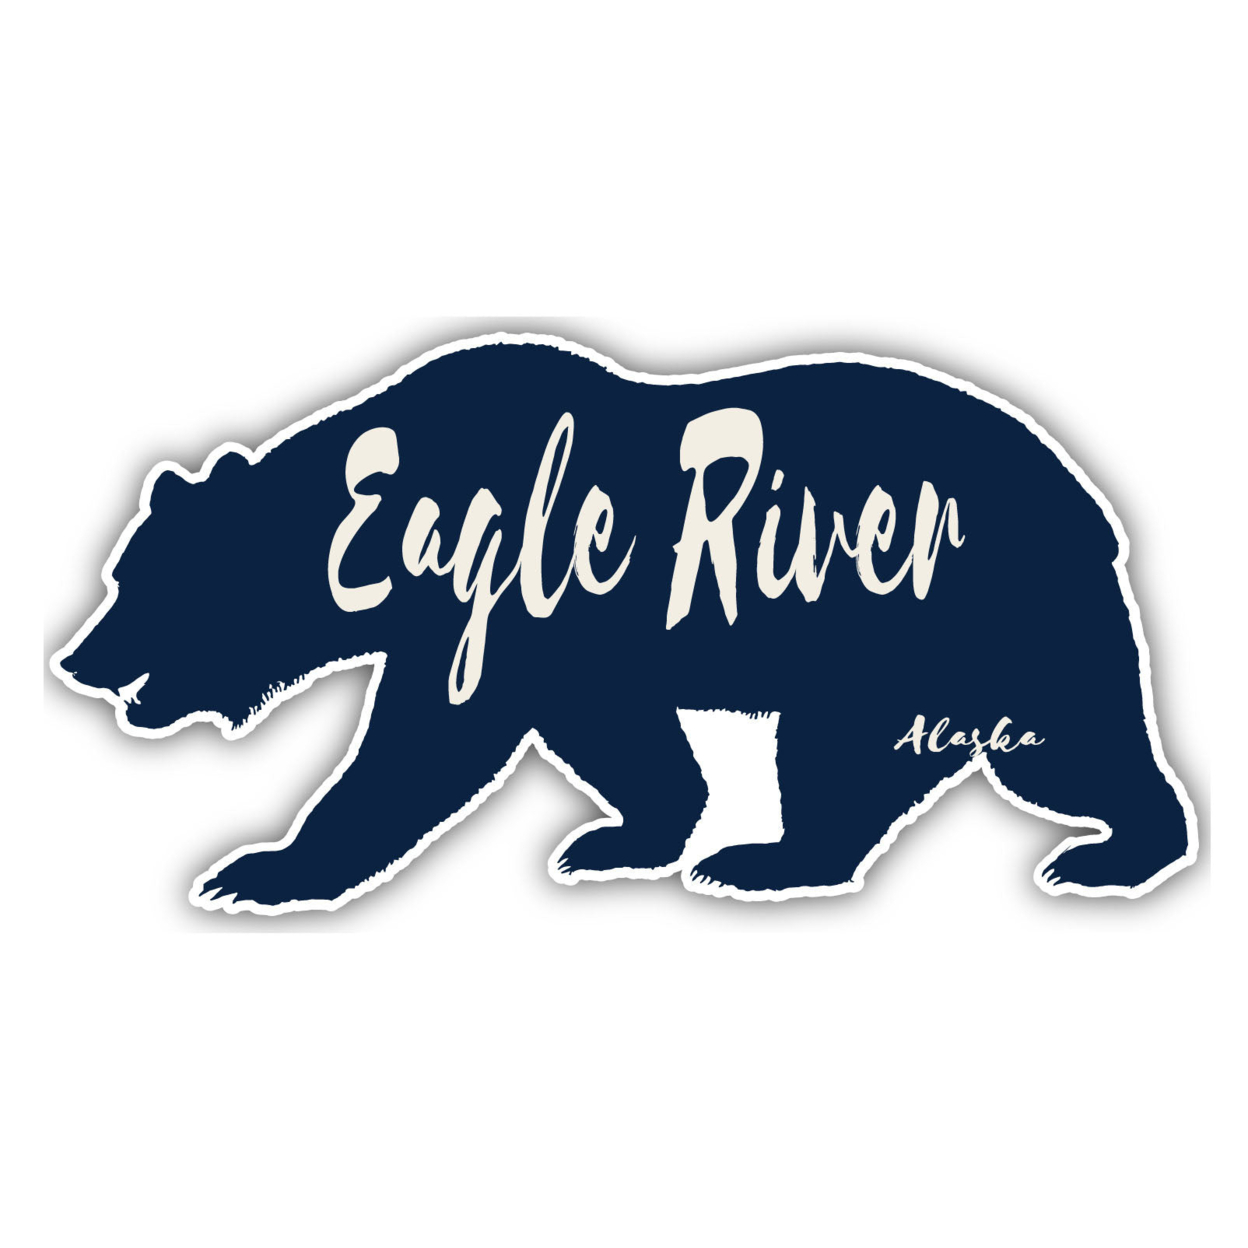 Eagle River Alaska Souvenir Decorative Stickers (Choose Theme And Size) - 4-Pack, 6-Inch, Tent